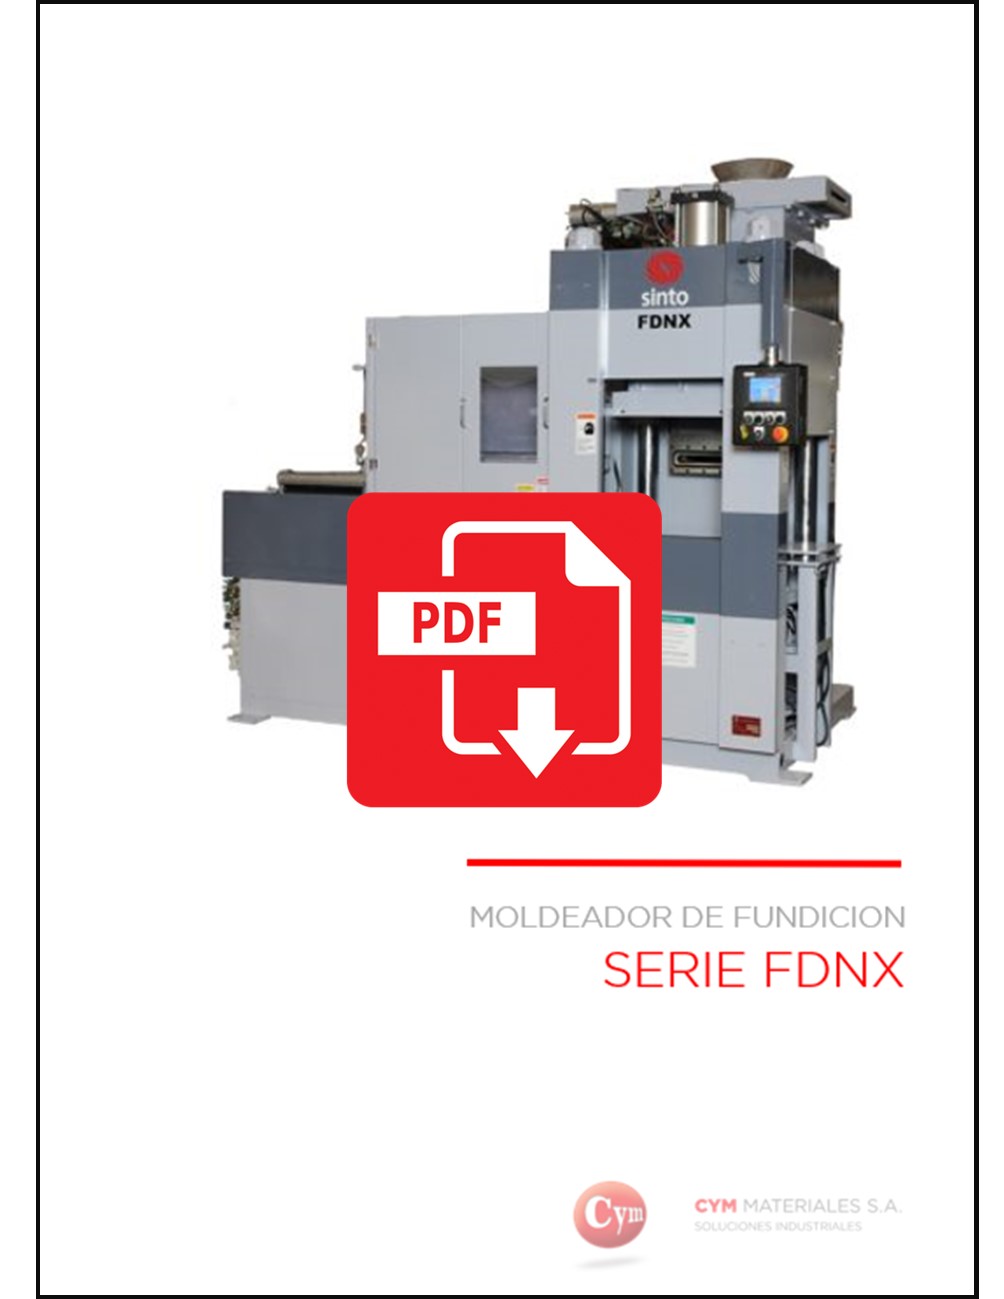 Equipo de Moldeado para fundicion Series - FDNX